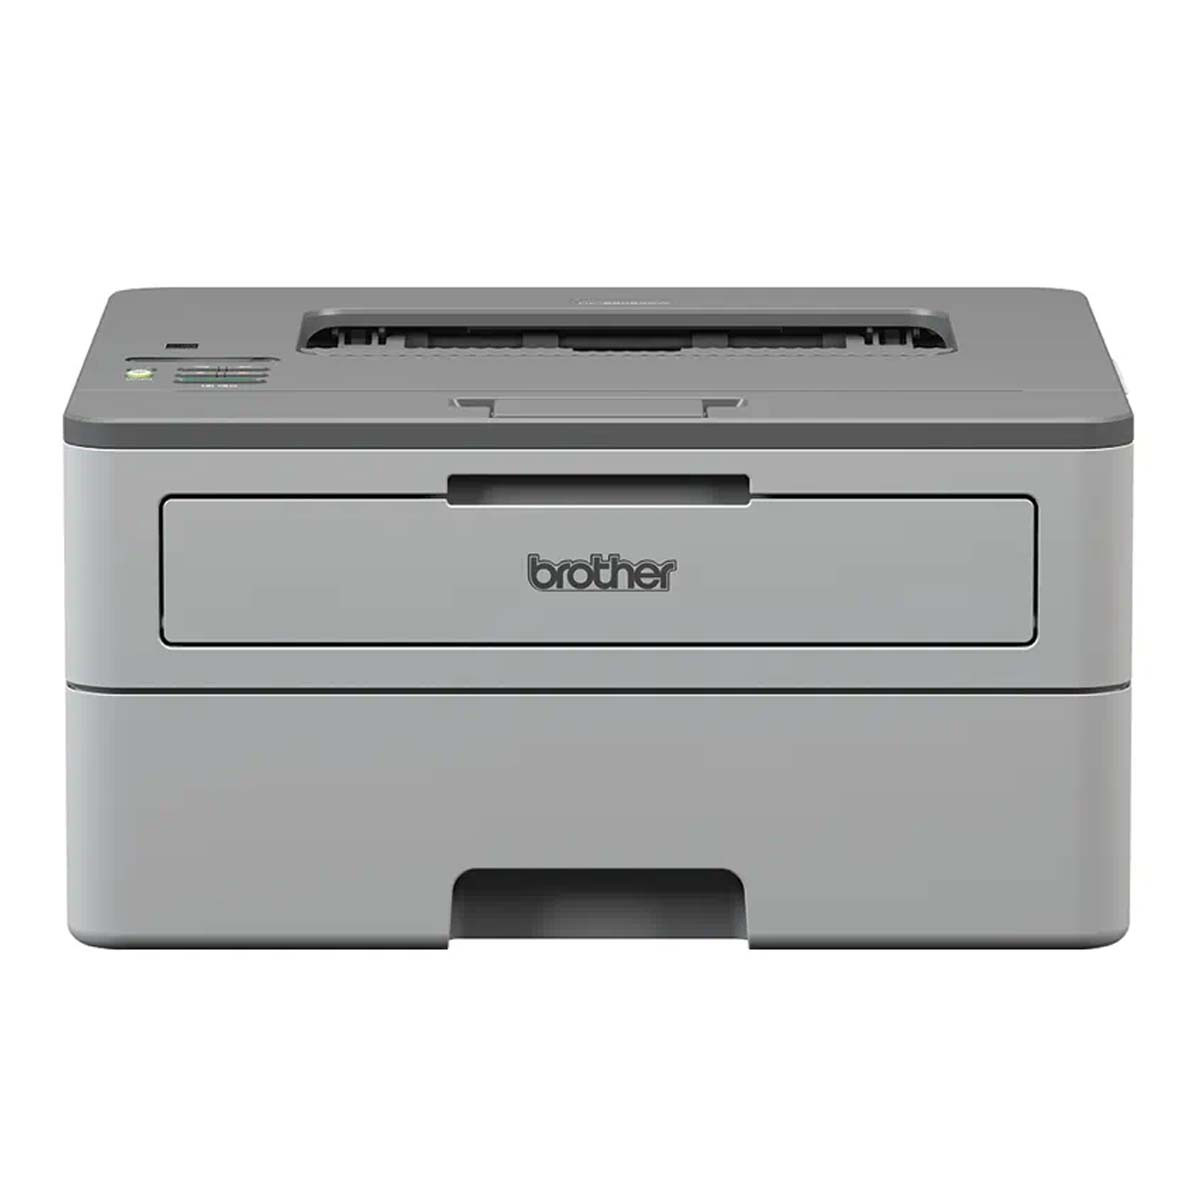 Impressora Brother HL-B2080DW B2080DW Laser Monocromática com Wireless e Duplex